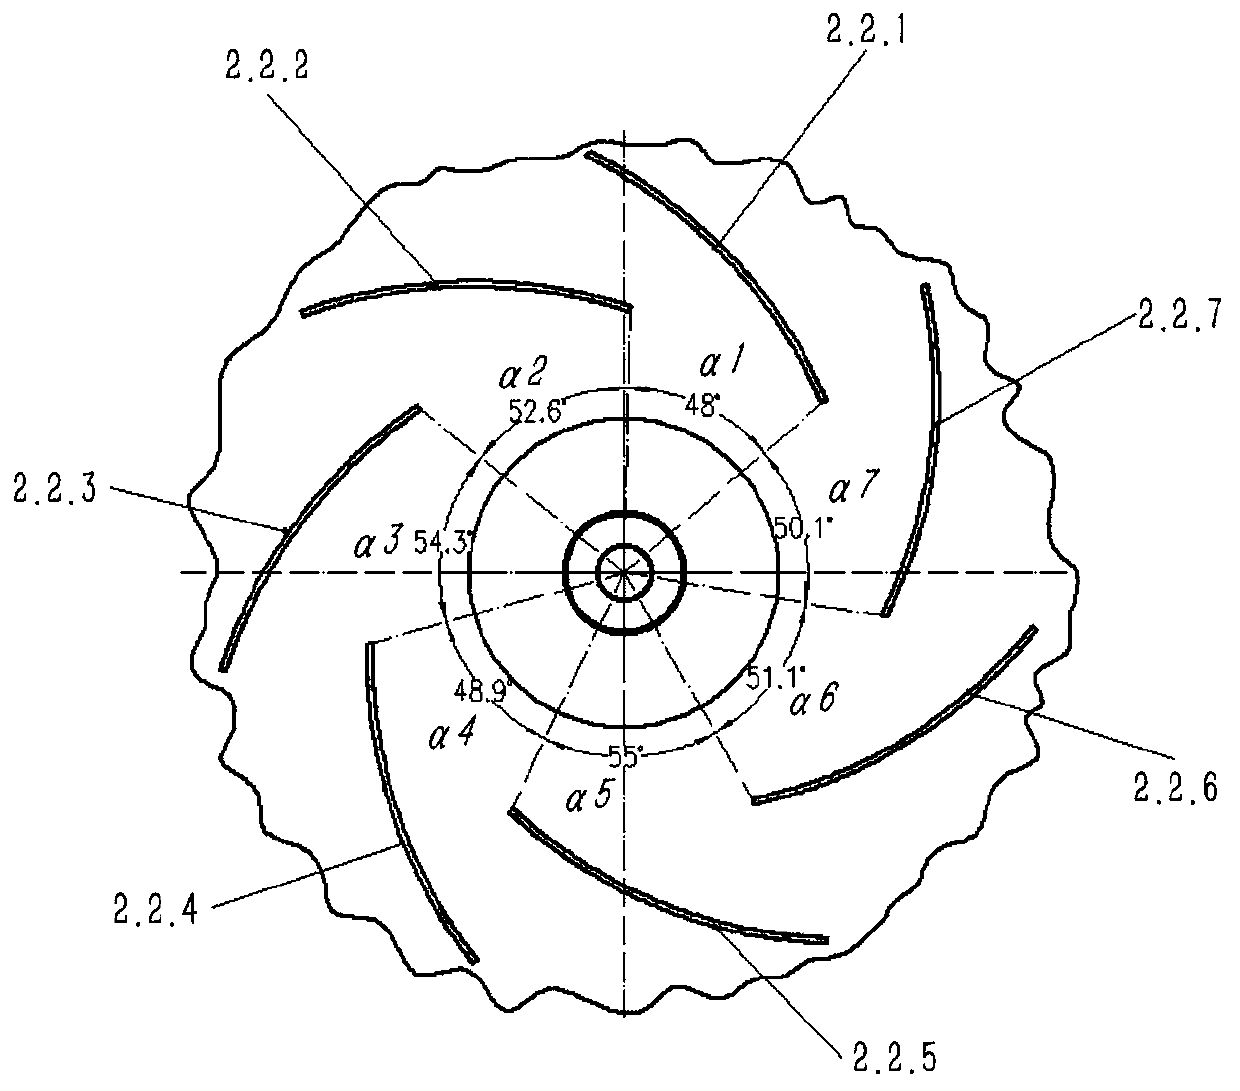 Asymmetric type centrifugal impeller fan